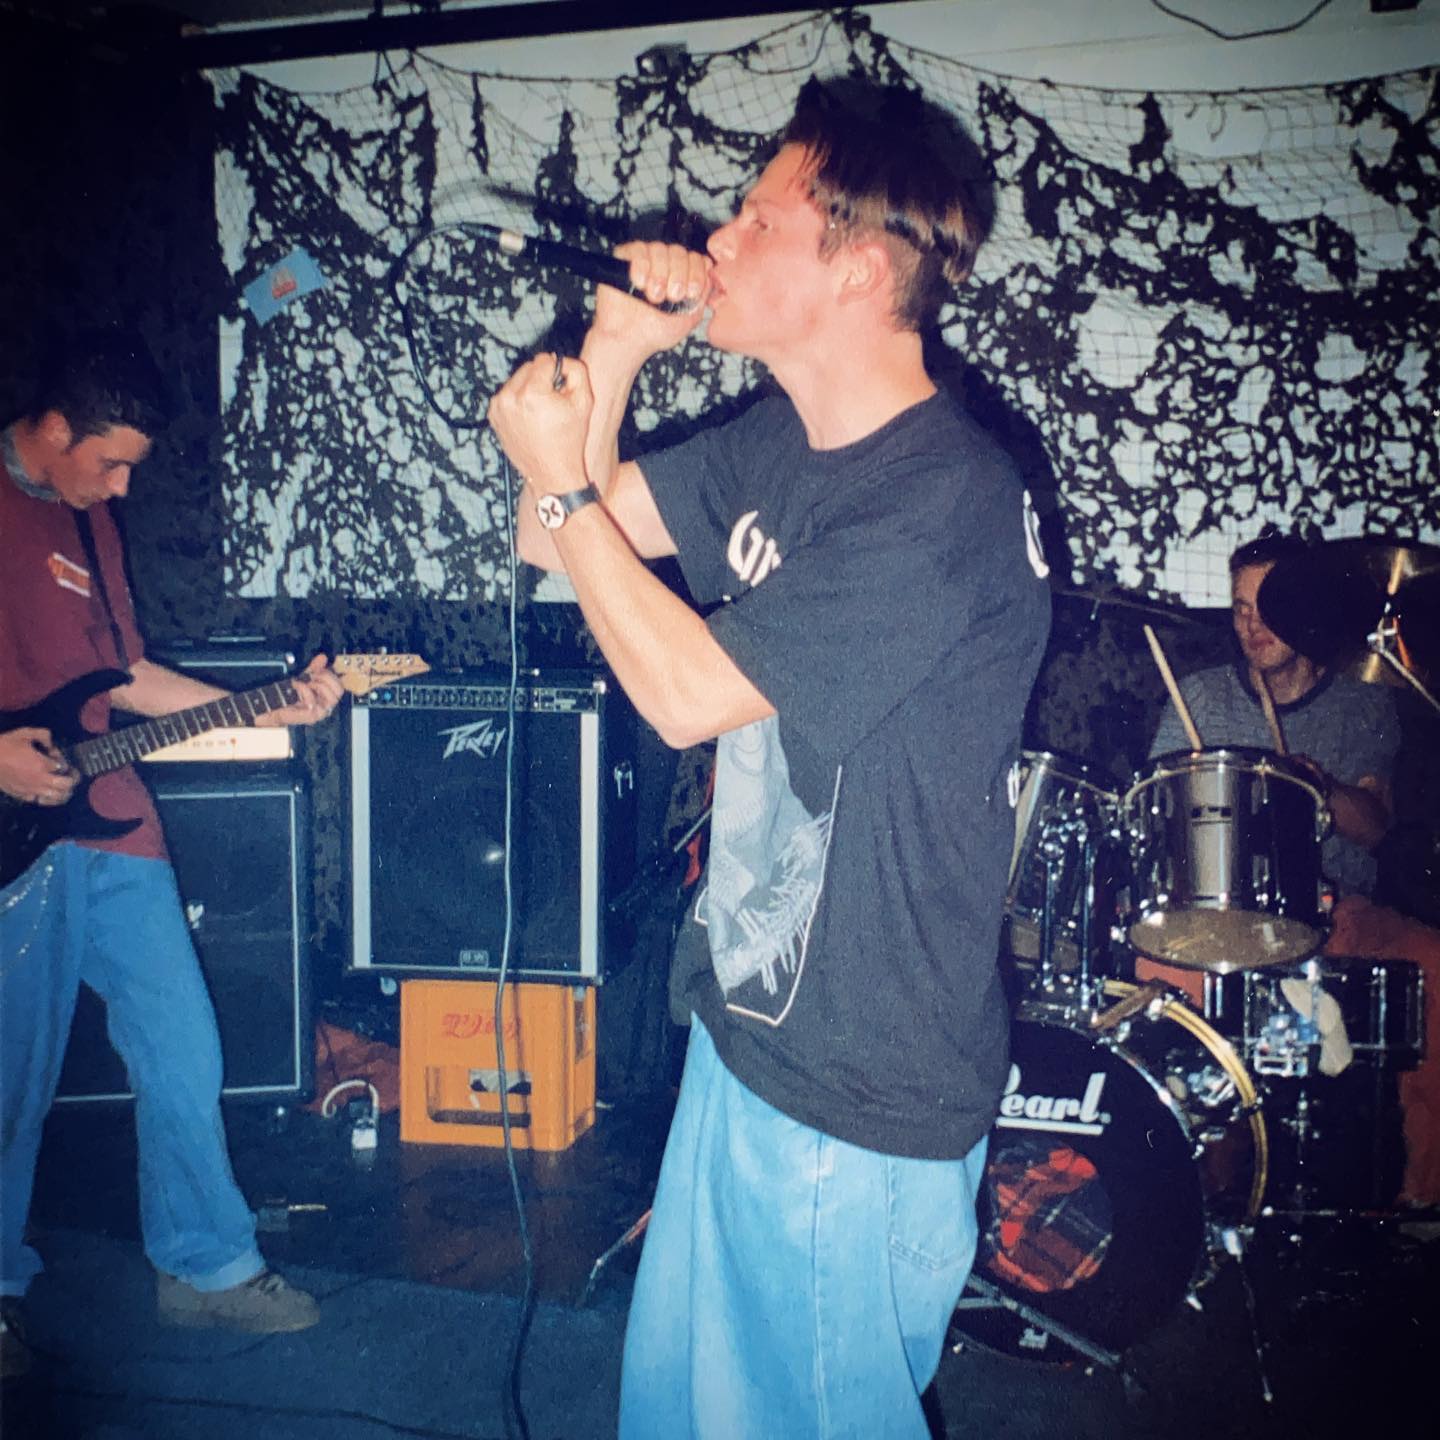 Invidia - Hoogeveen (NL) - 18 October 1997 #straightedge #hardcore #metal @xthreesomex #gigpic by @twentylandcrew